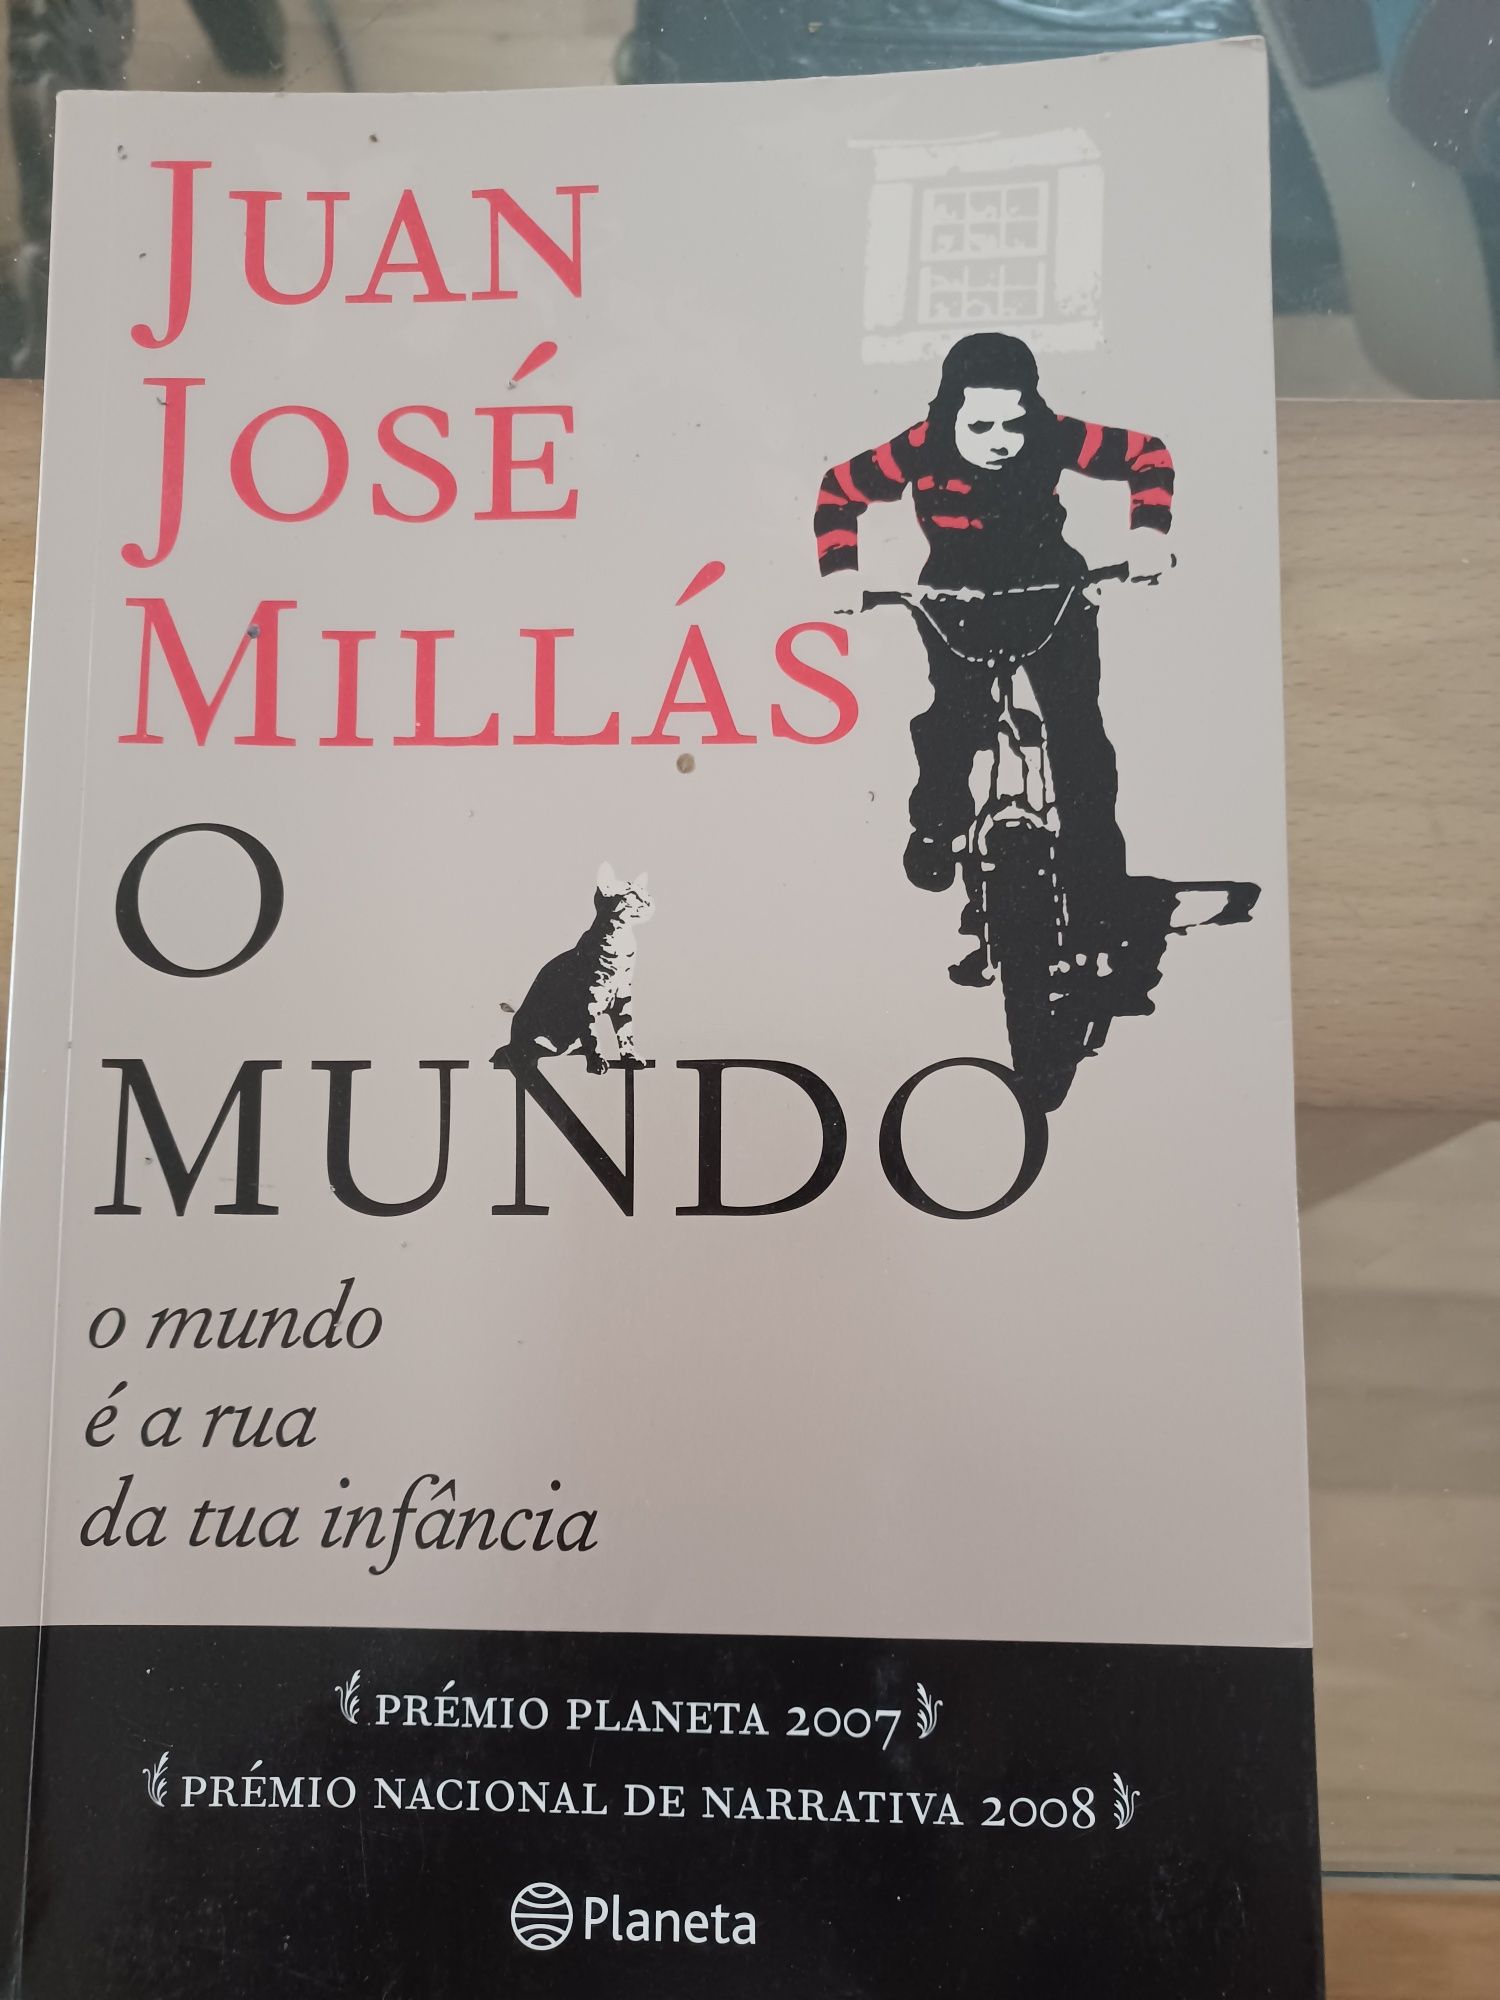 Juan José Millás, "O mundo"